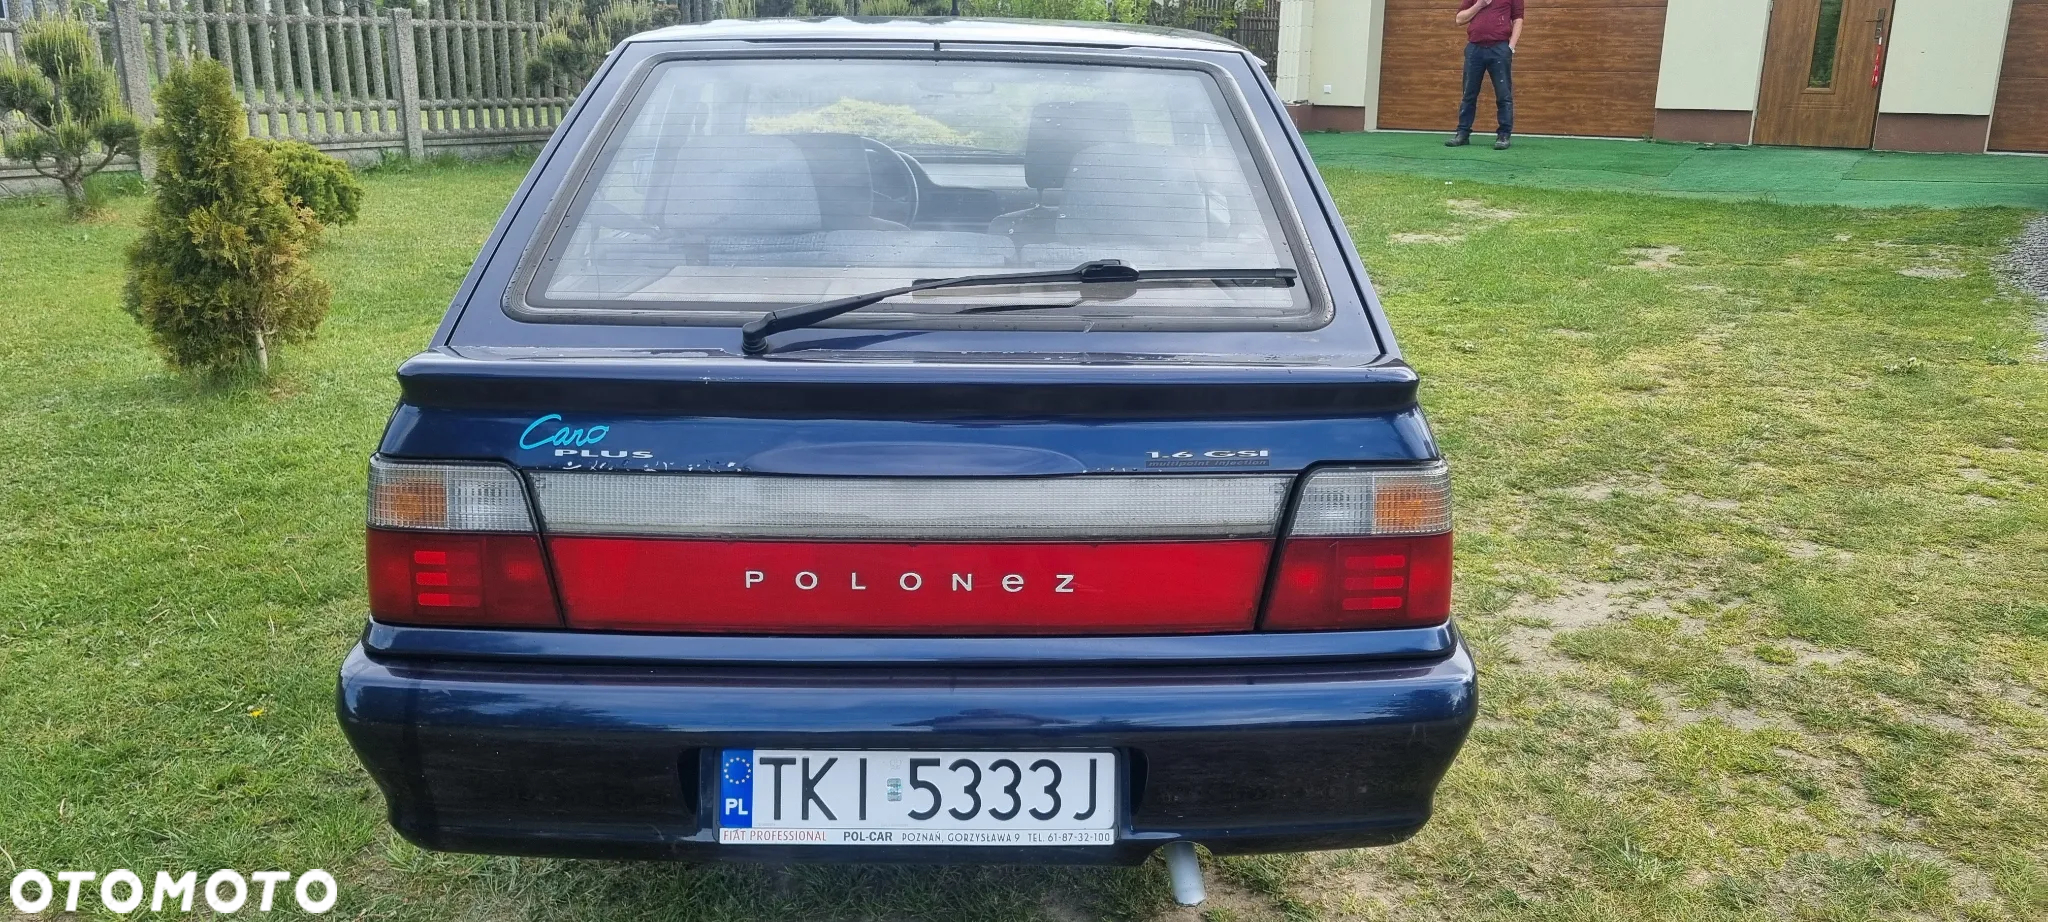 Polonez Caro - 5